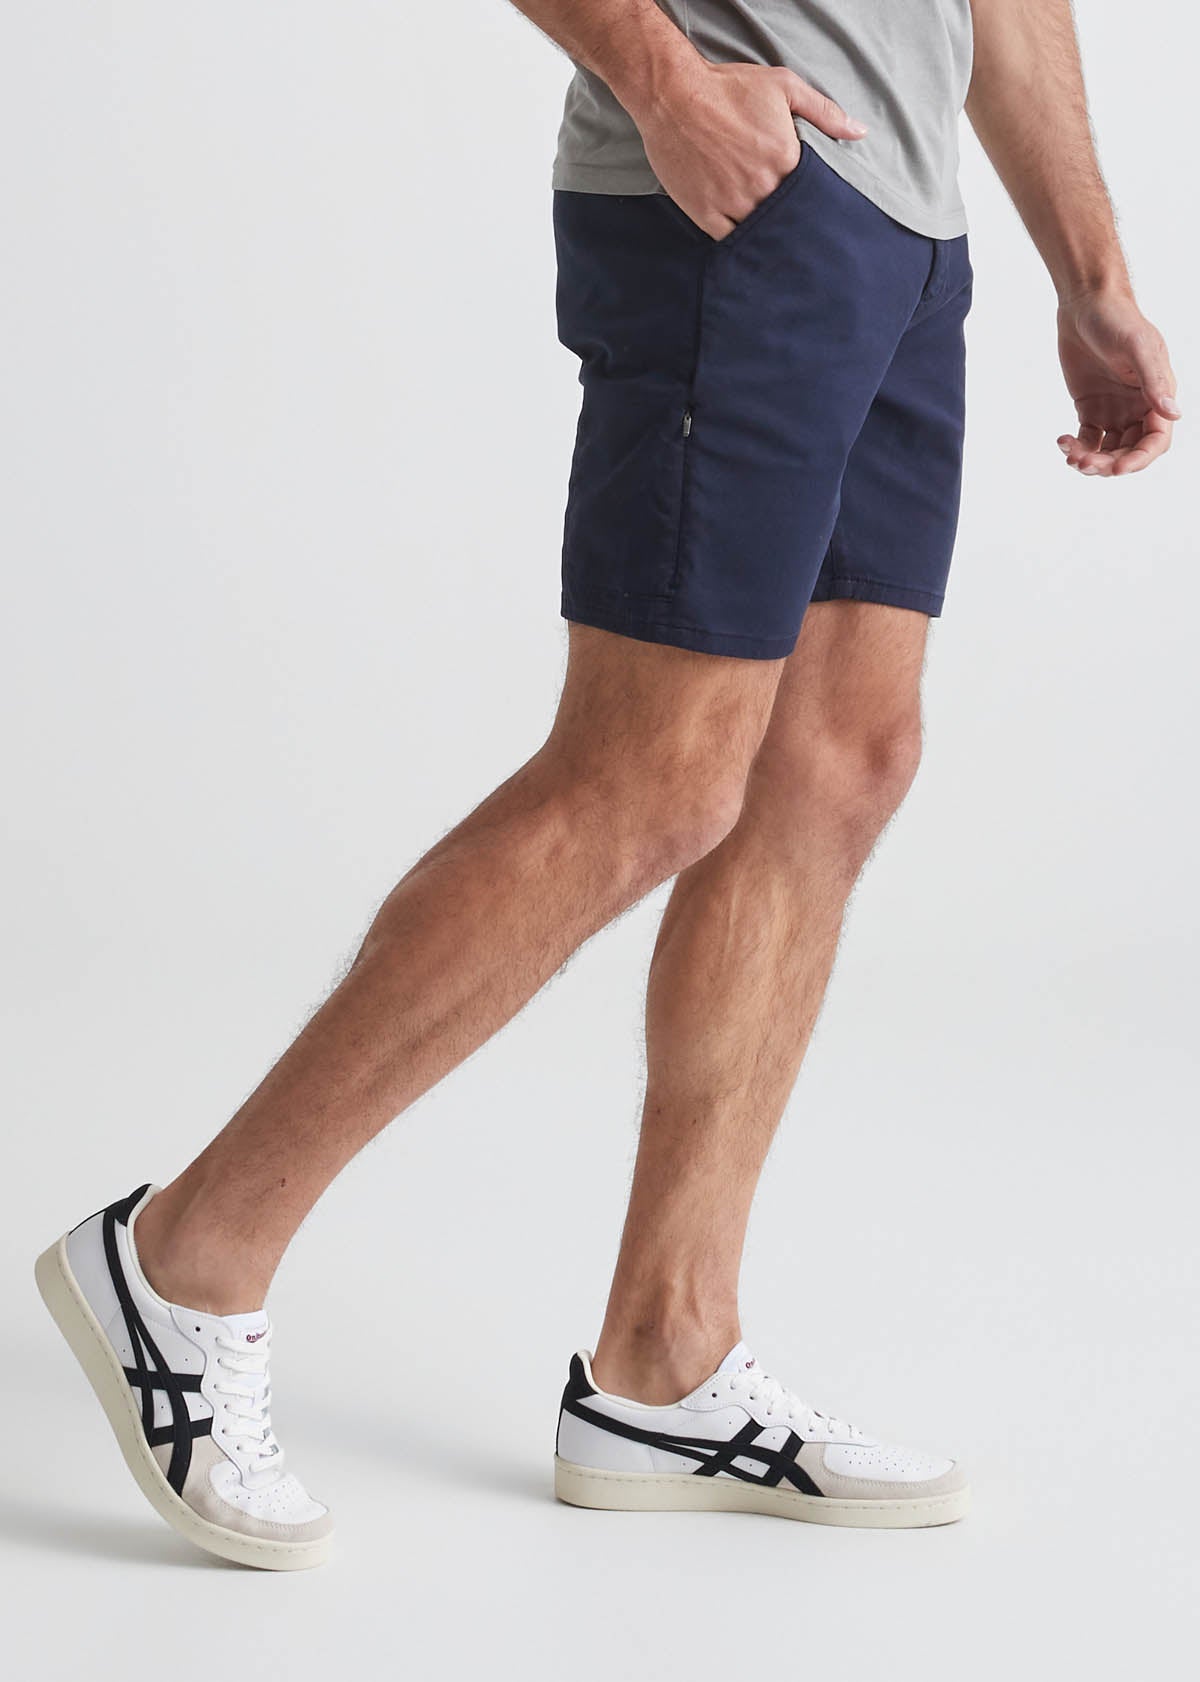 Slim Ultimate Shorts - 6-inch inseam